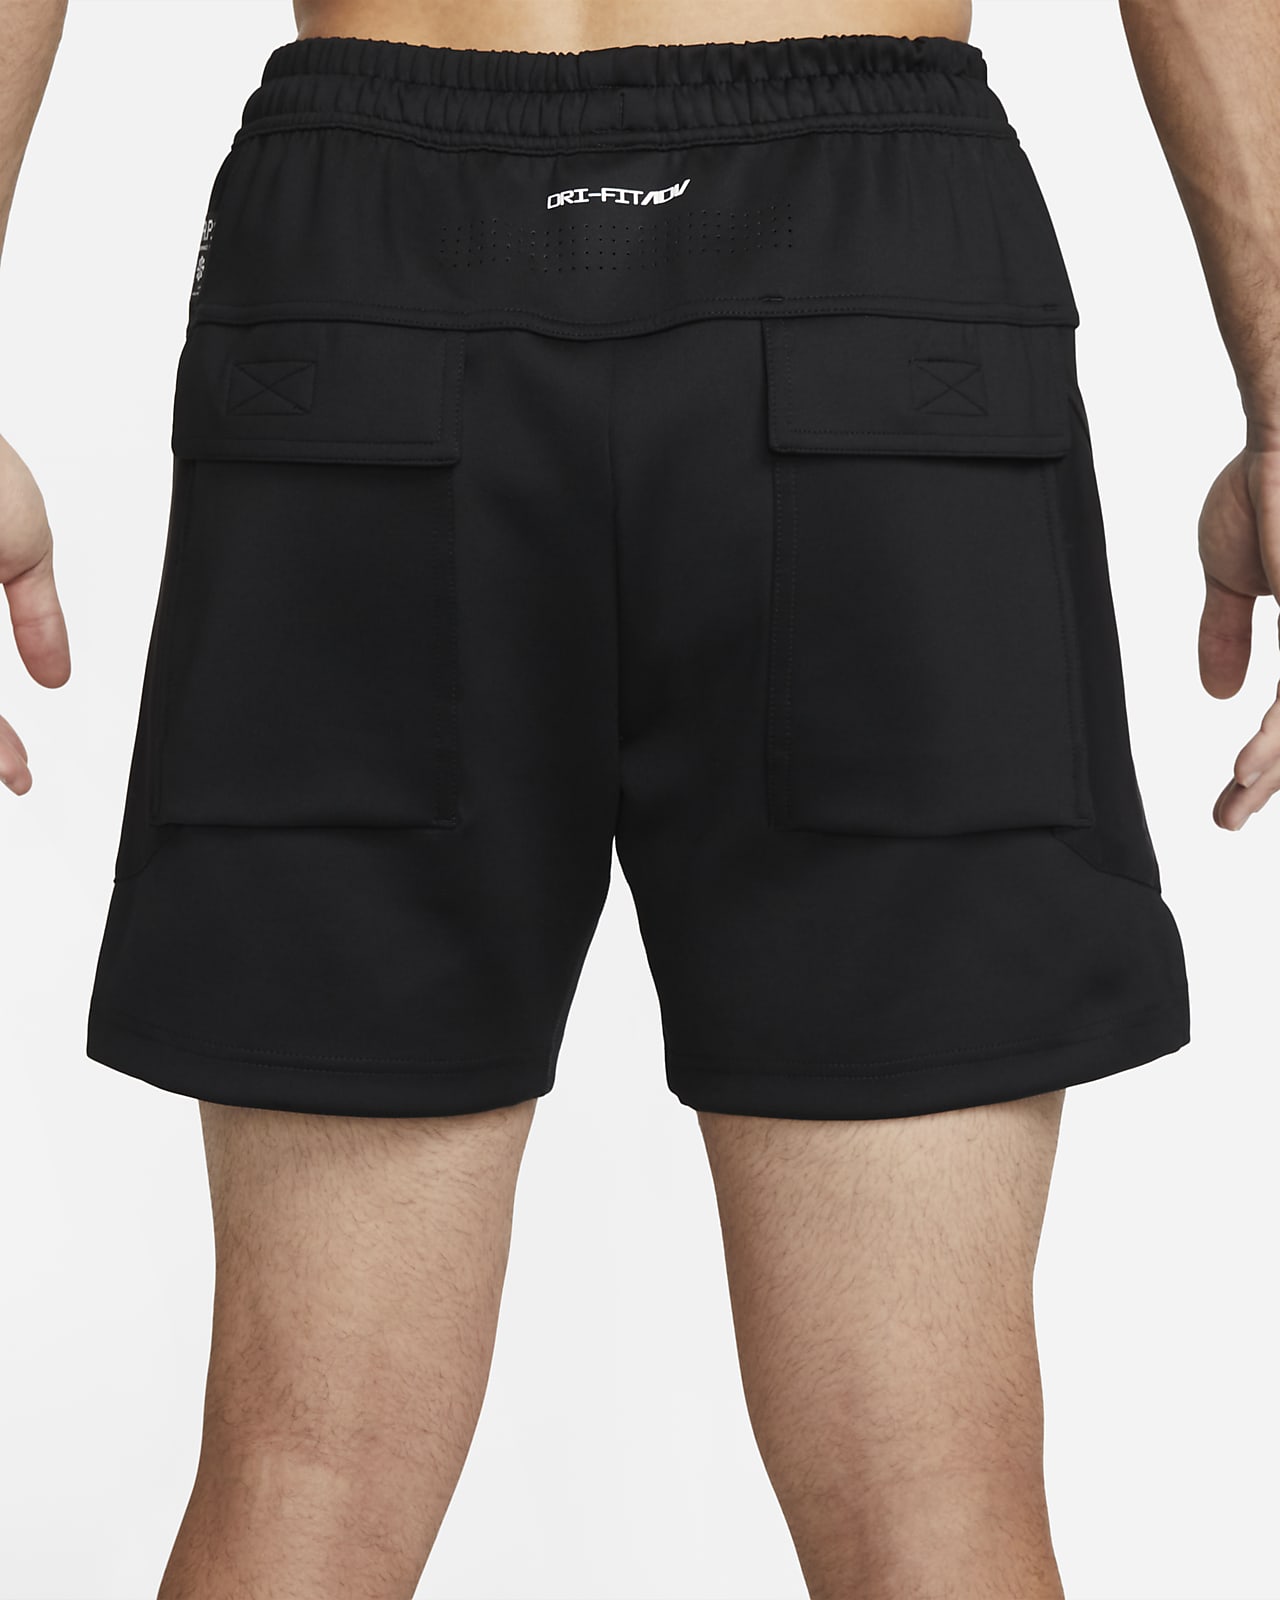 Men's Nike Shorts, Dri-Fit, Cargo & Basketball Shorts